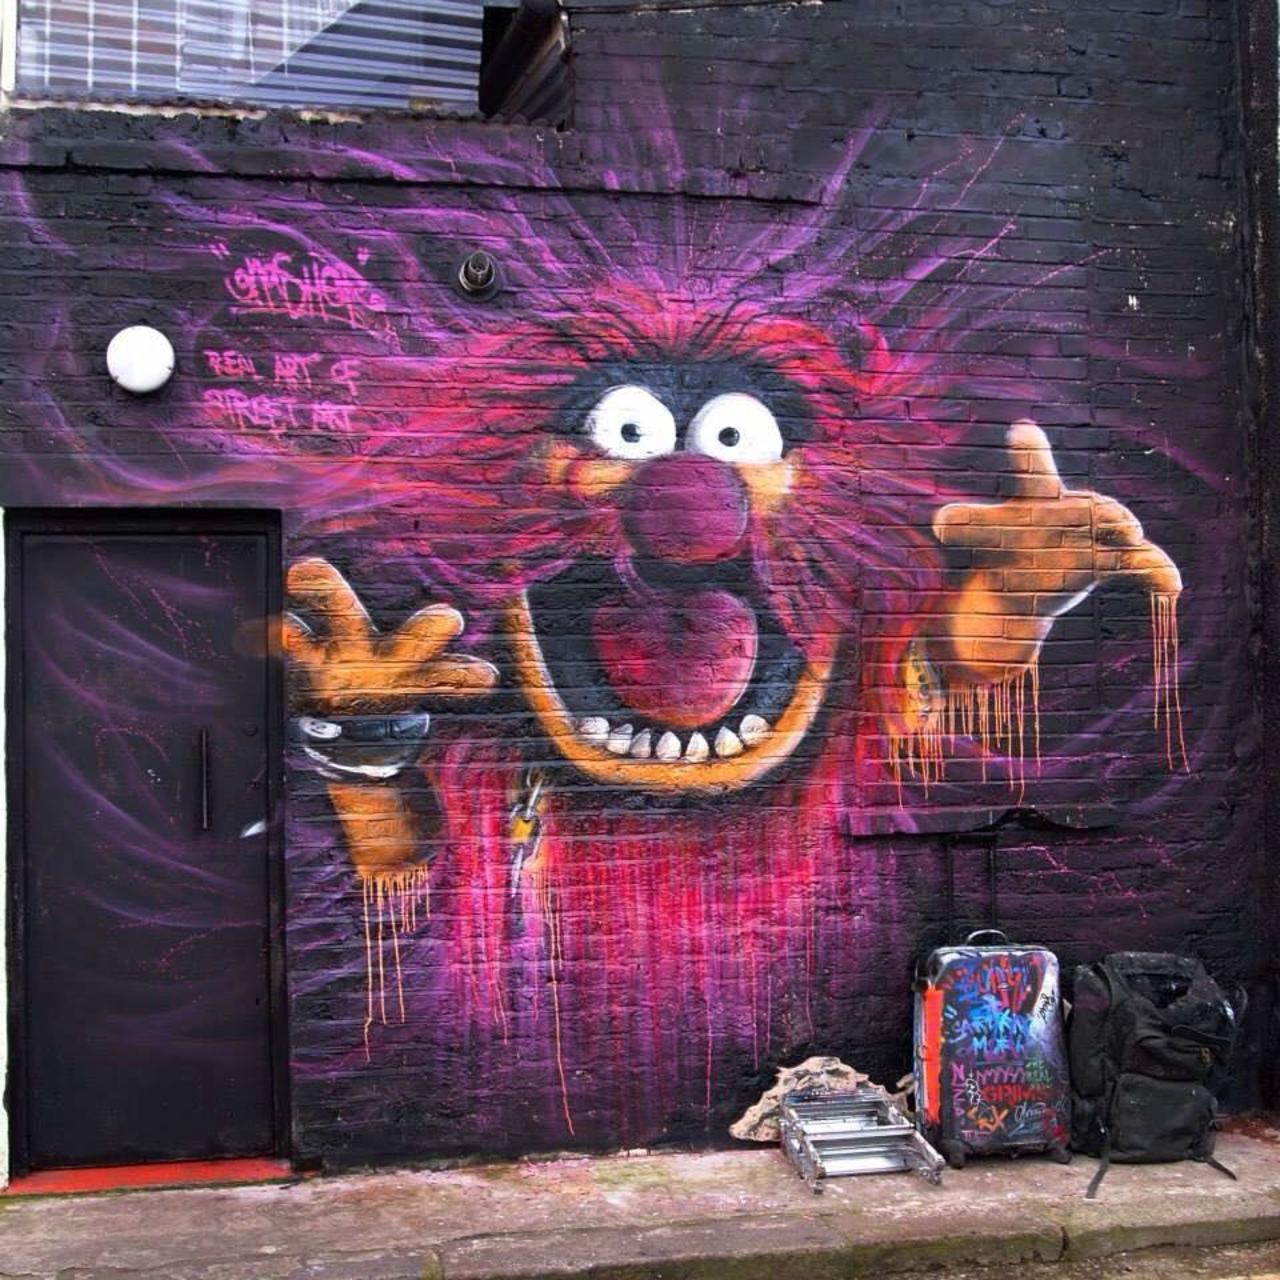 Fun Street Art of Animal by Gnasher 

#art #arte #graffiti #streetart http://t.co/9LNH0skaFW